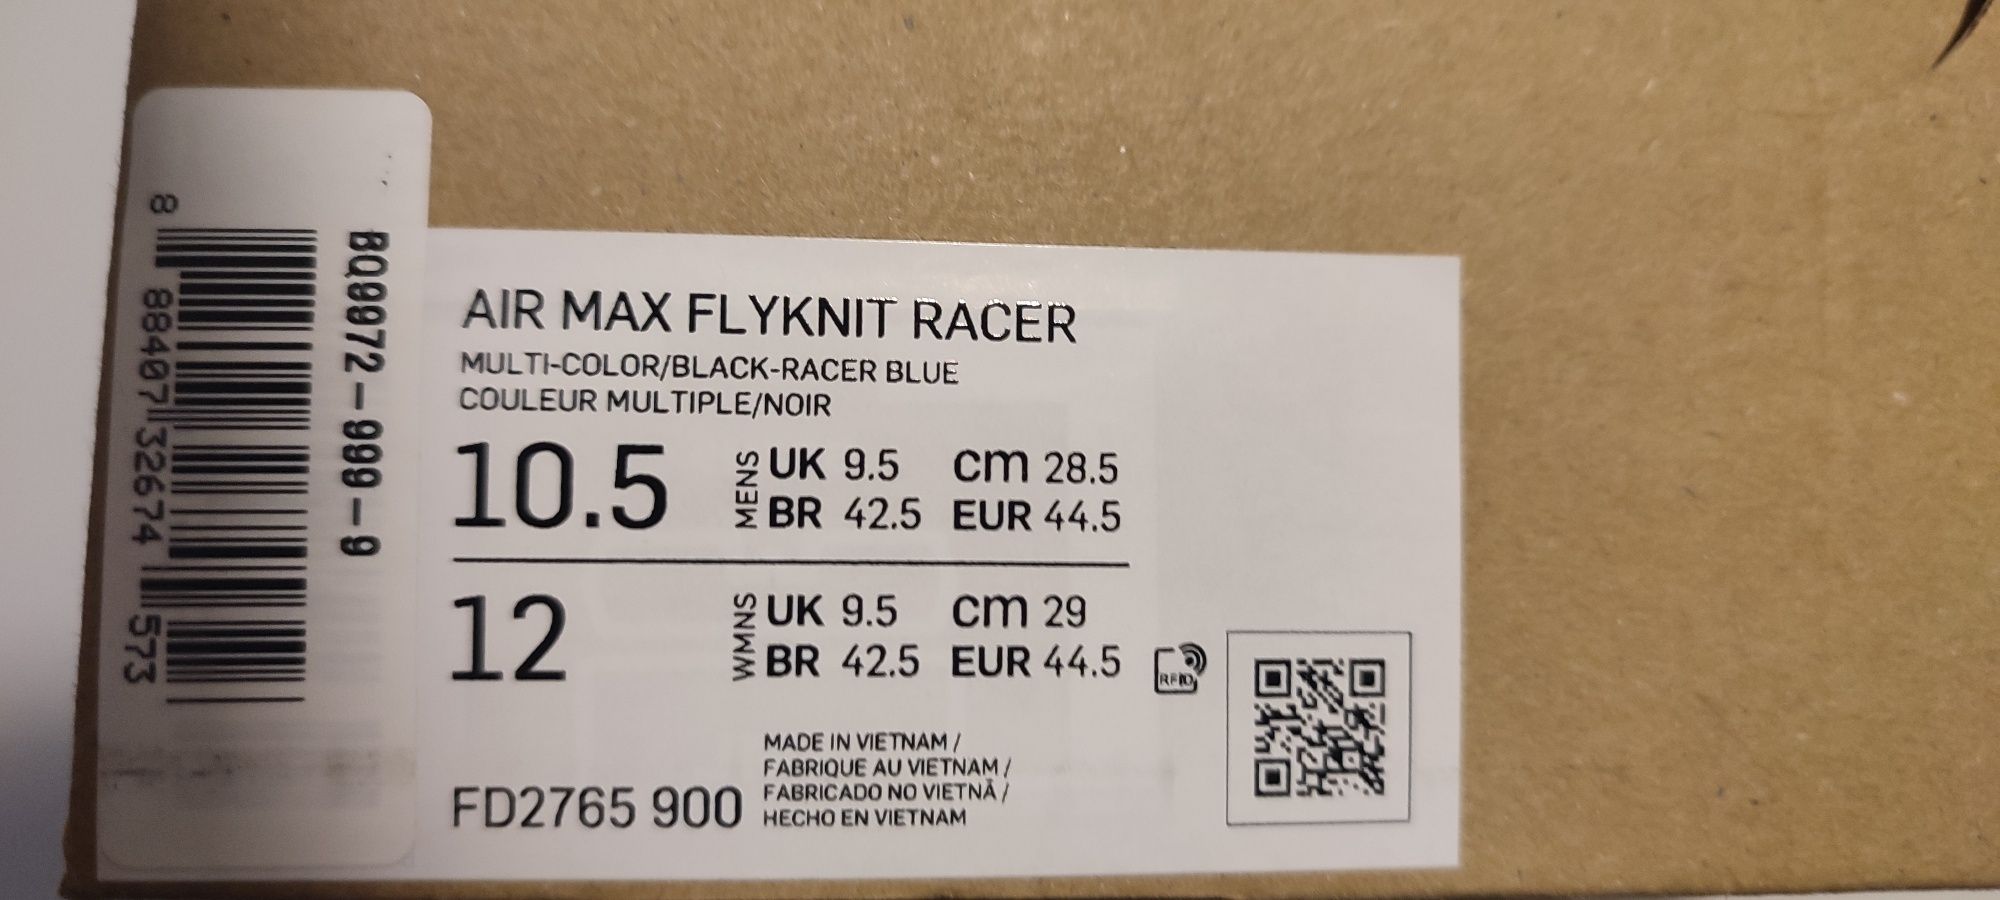 Nike air max flyknit racer EUR 44.5 28.5cm